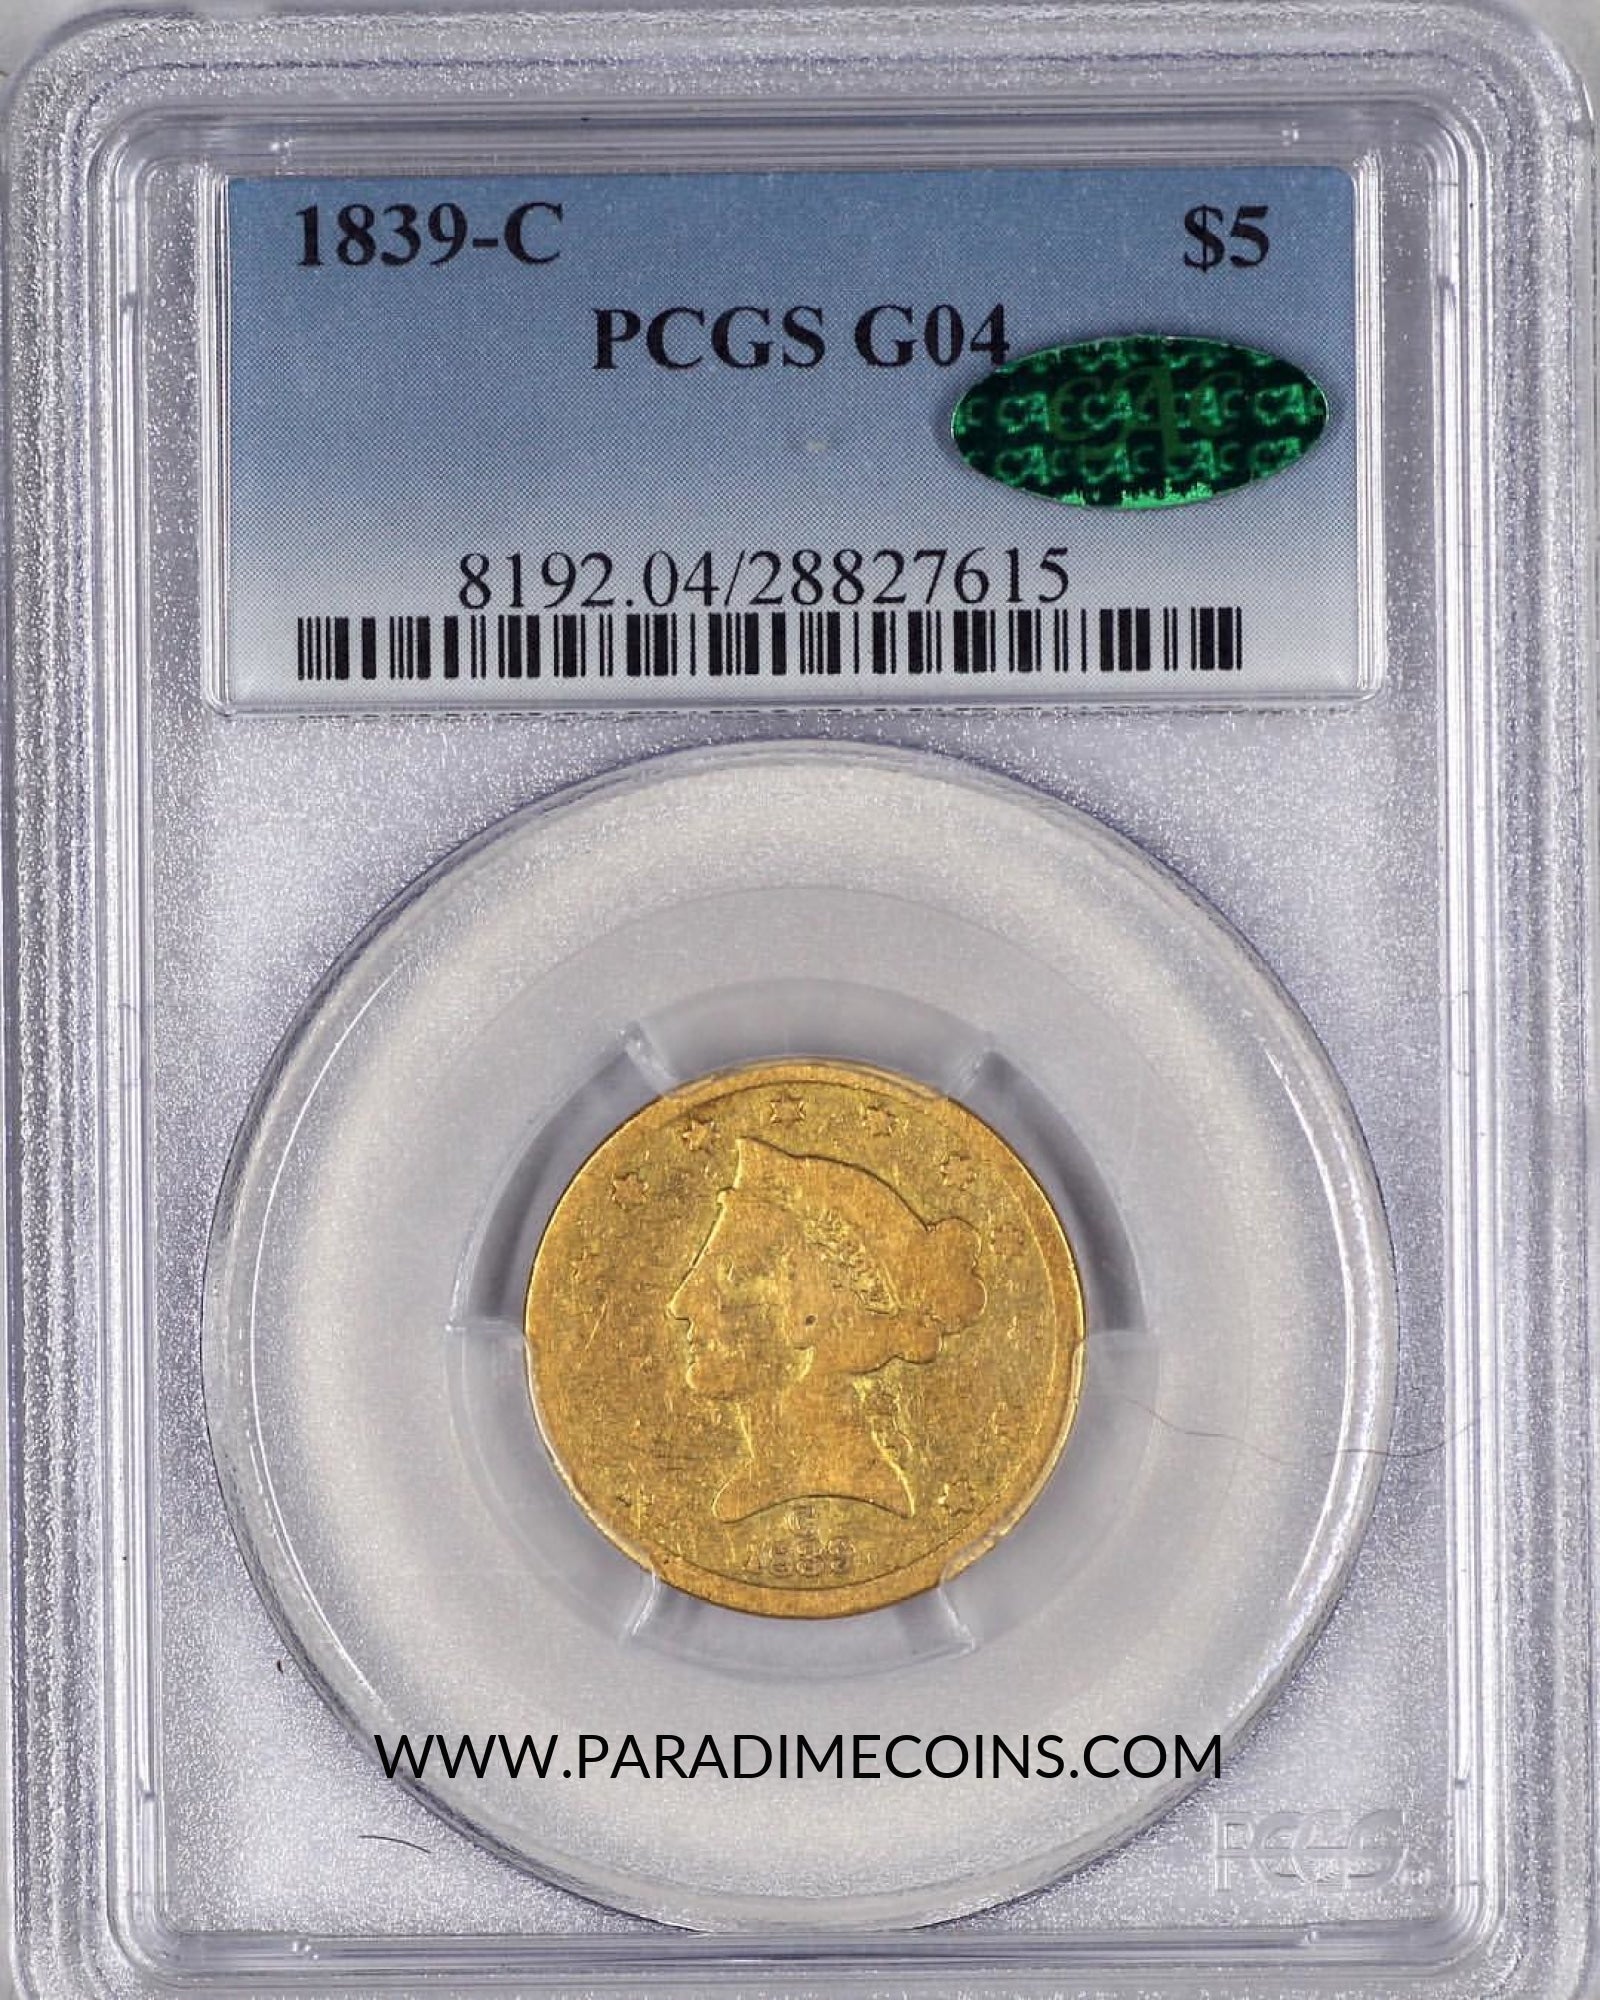 1839-C $5 G04 PCGS CAC - Paradime Coins | PCGS NGC CACG CAC Rare US Numismatic Coins For Sale